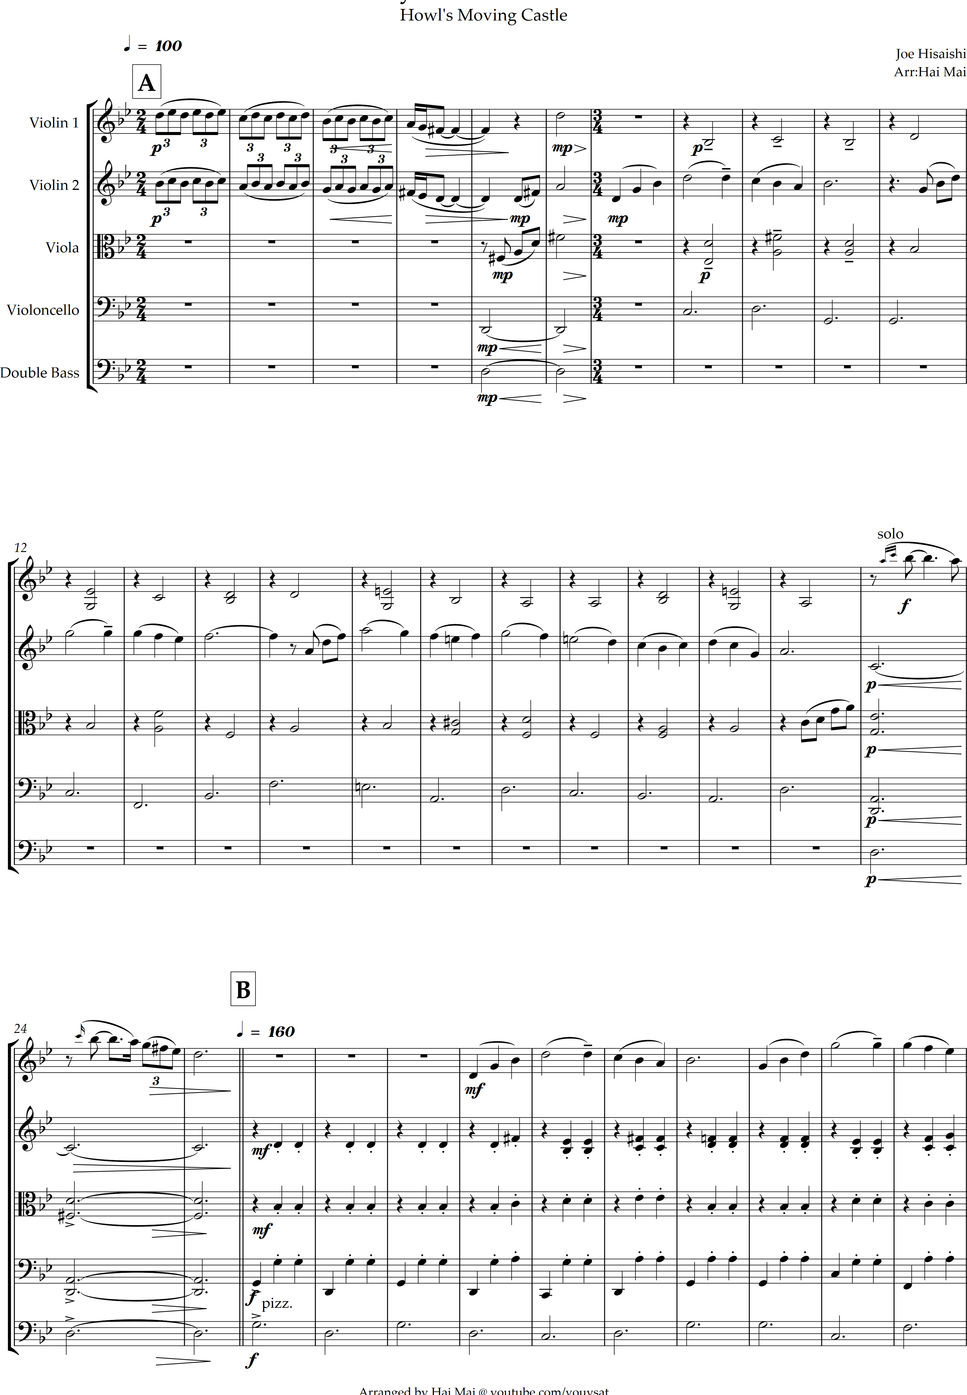 Joe Hisaishi - Merry Go Round of Life - String Quintet(Howl's Moving Castle) by Hai Mai